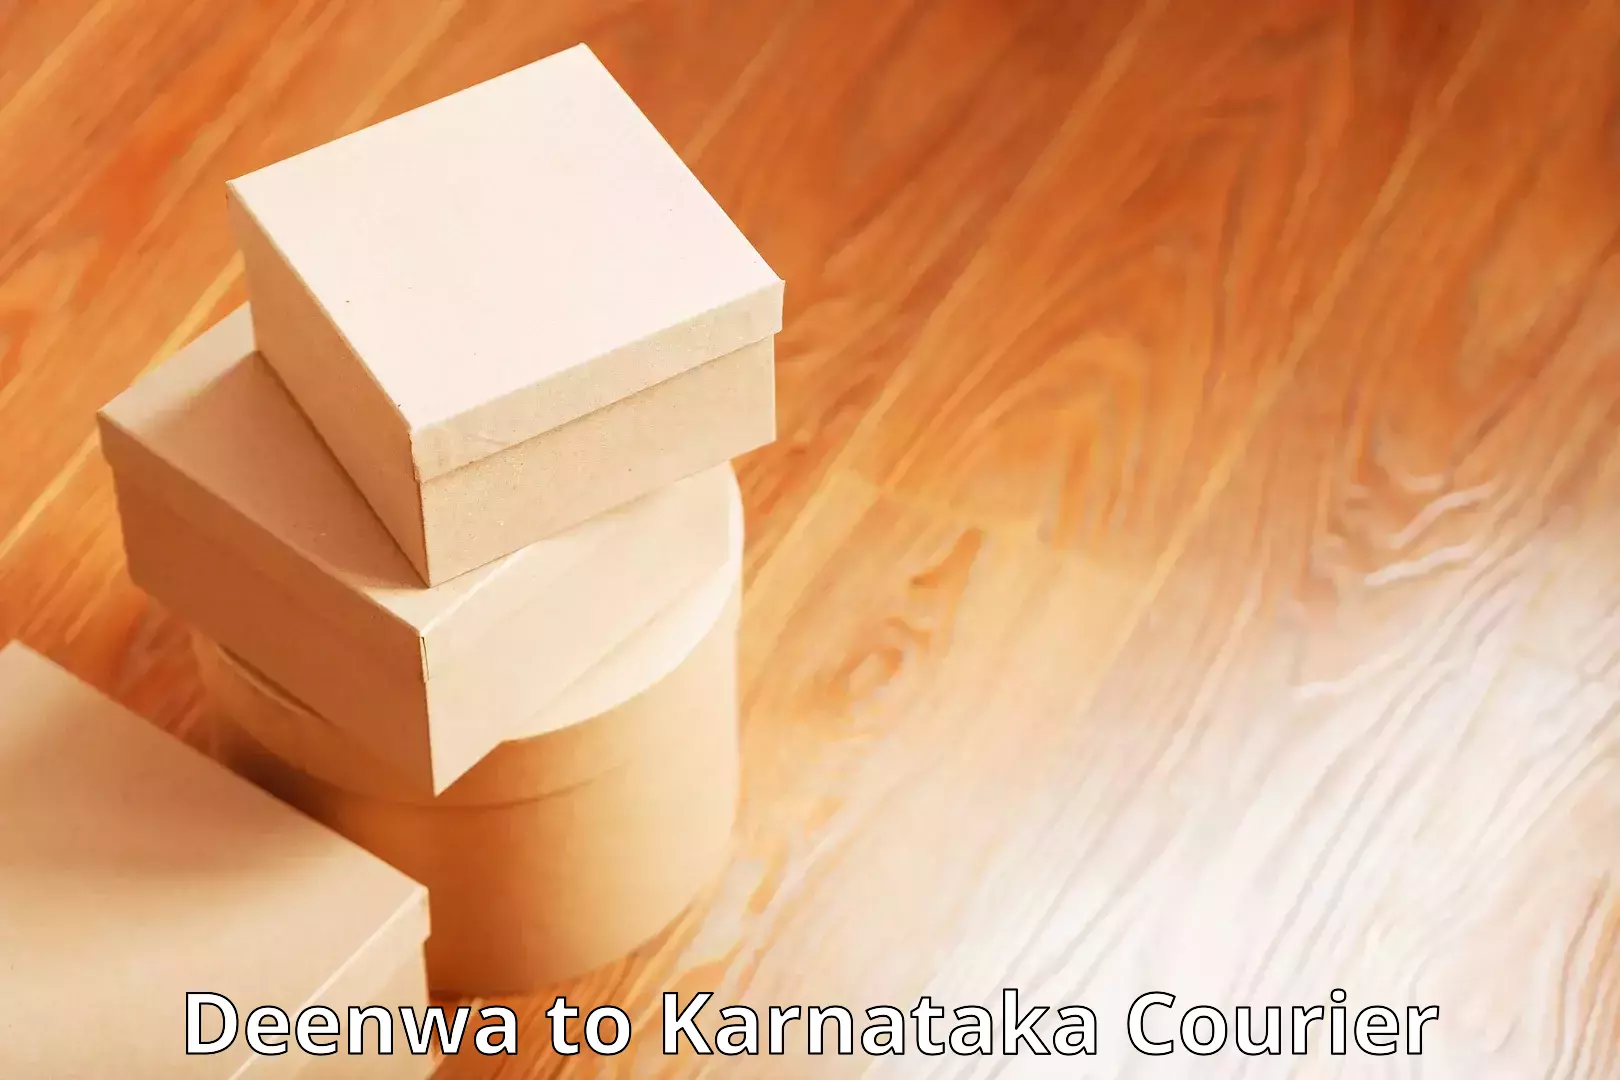 Courier service comparison Deenwa to Karnataka